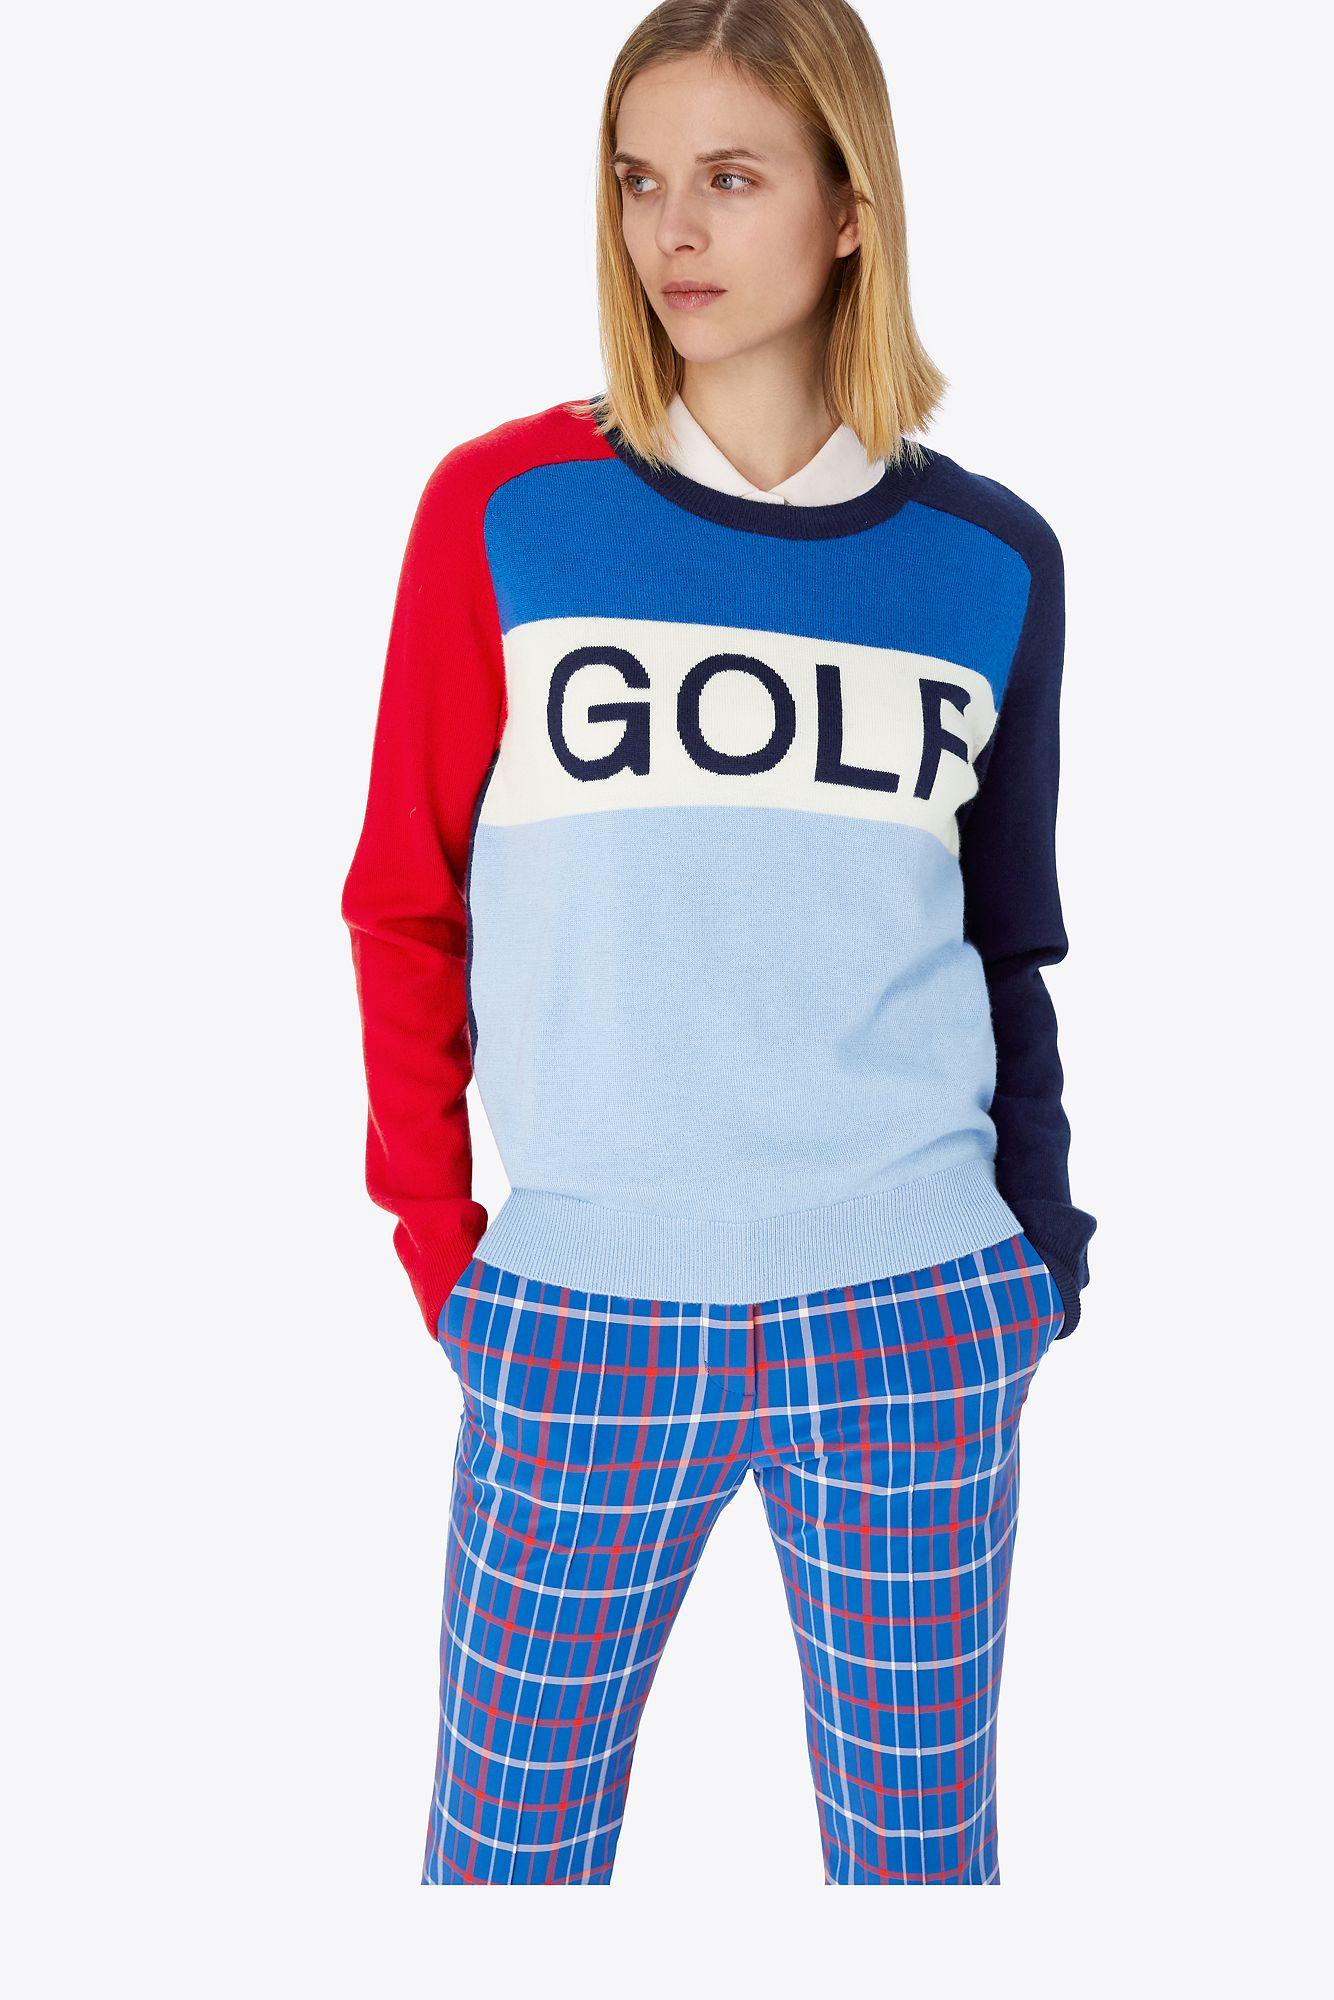 Tory Sport Cashmere Golf Sweater in Blue | Lyst